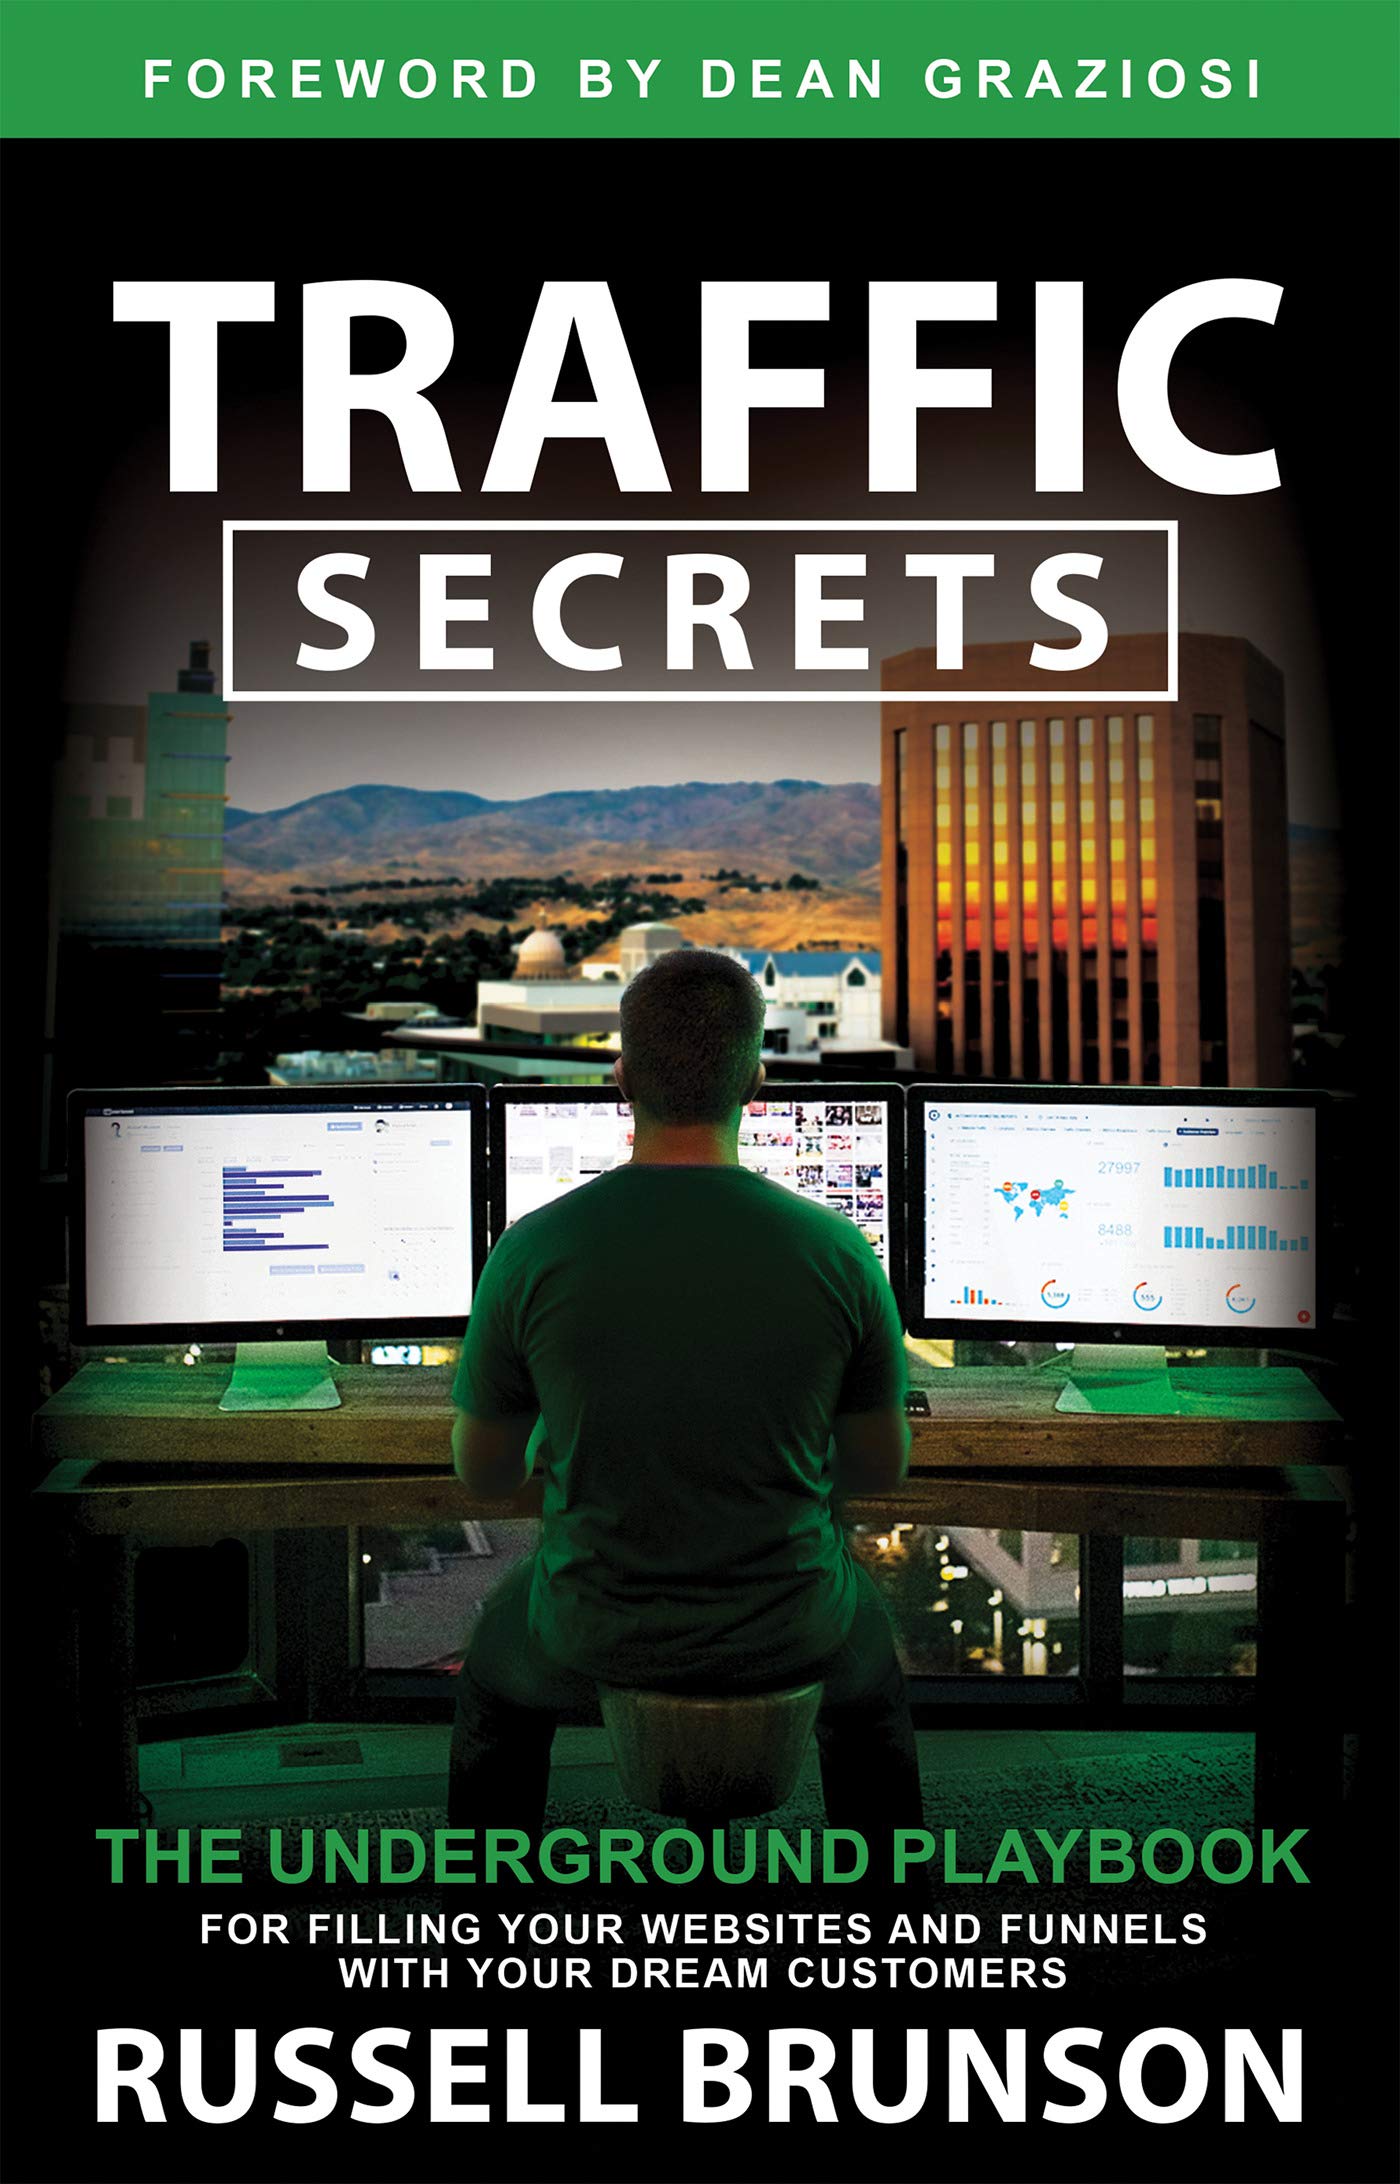 Russell Brunson - Traffic Secrets: Underground Course (12GB)